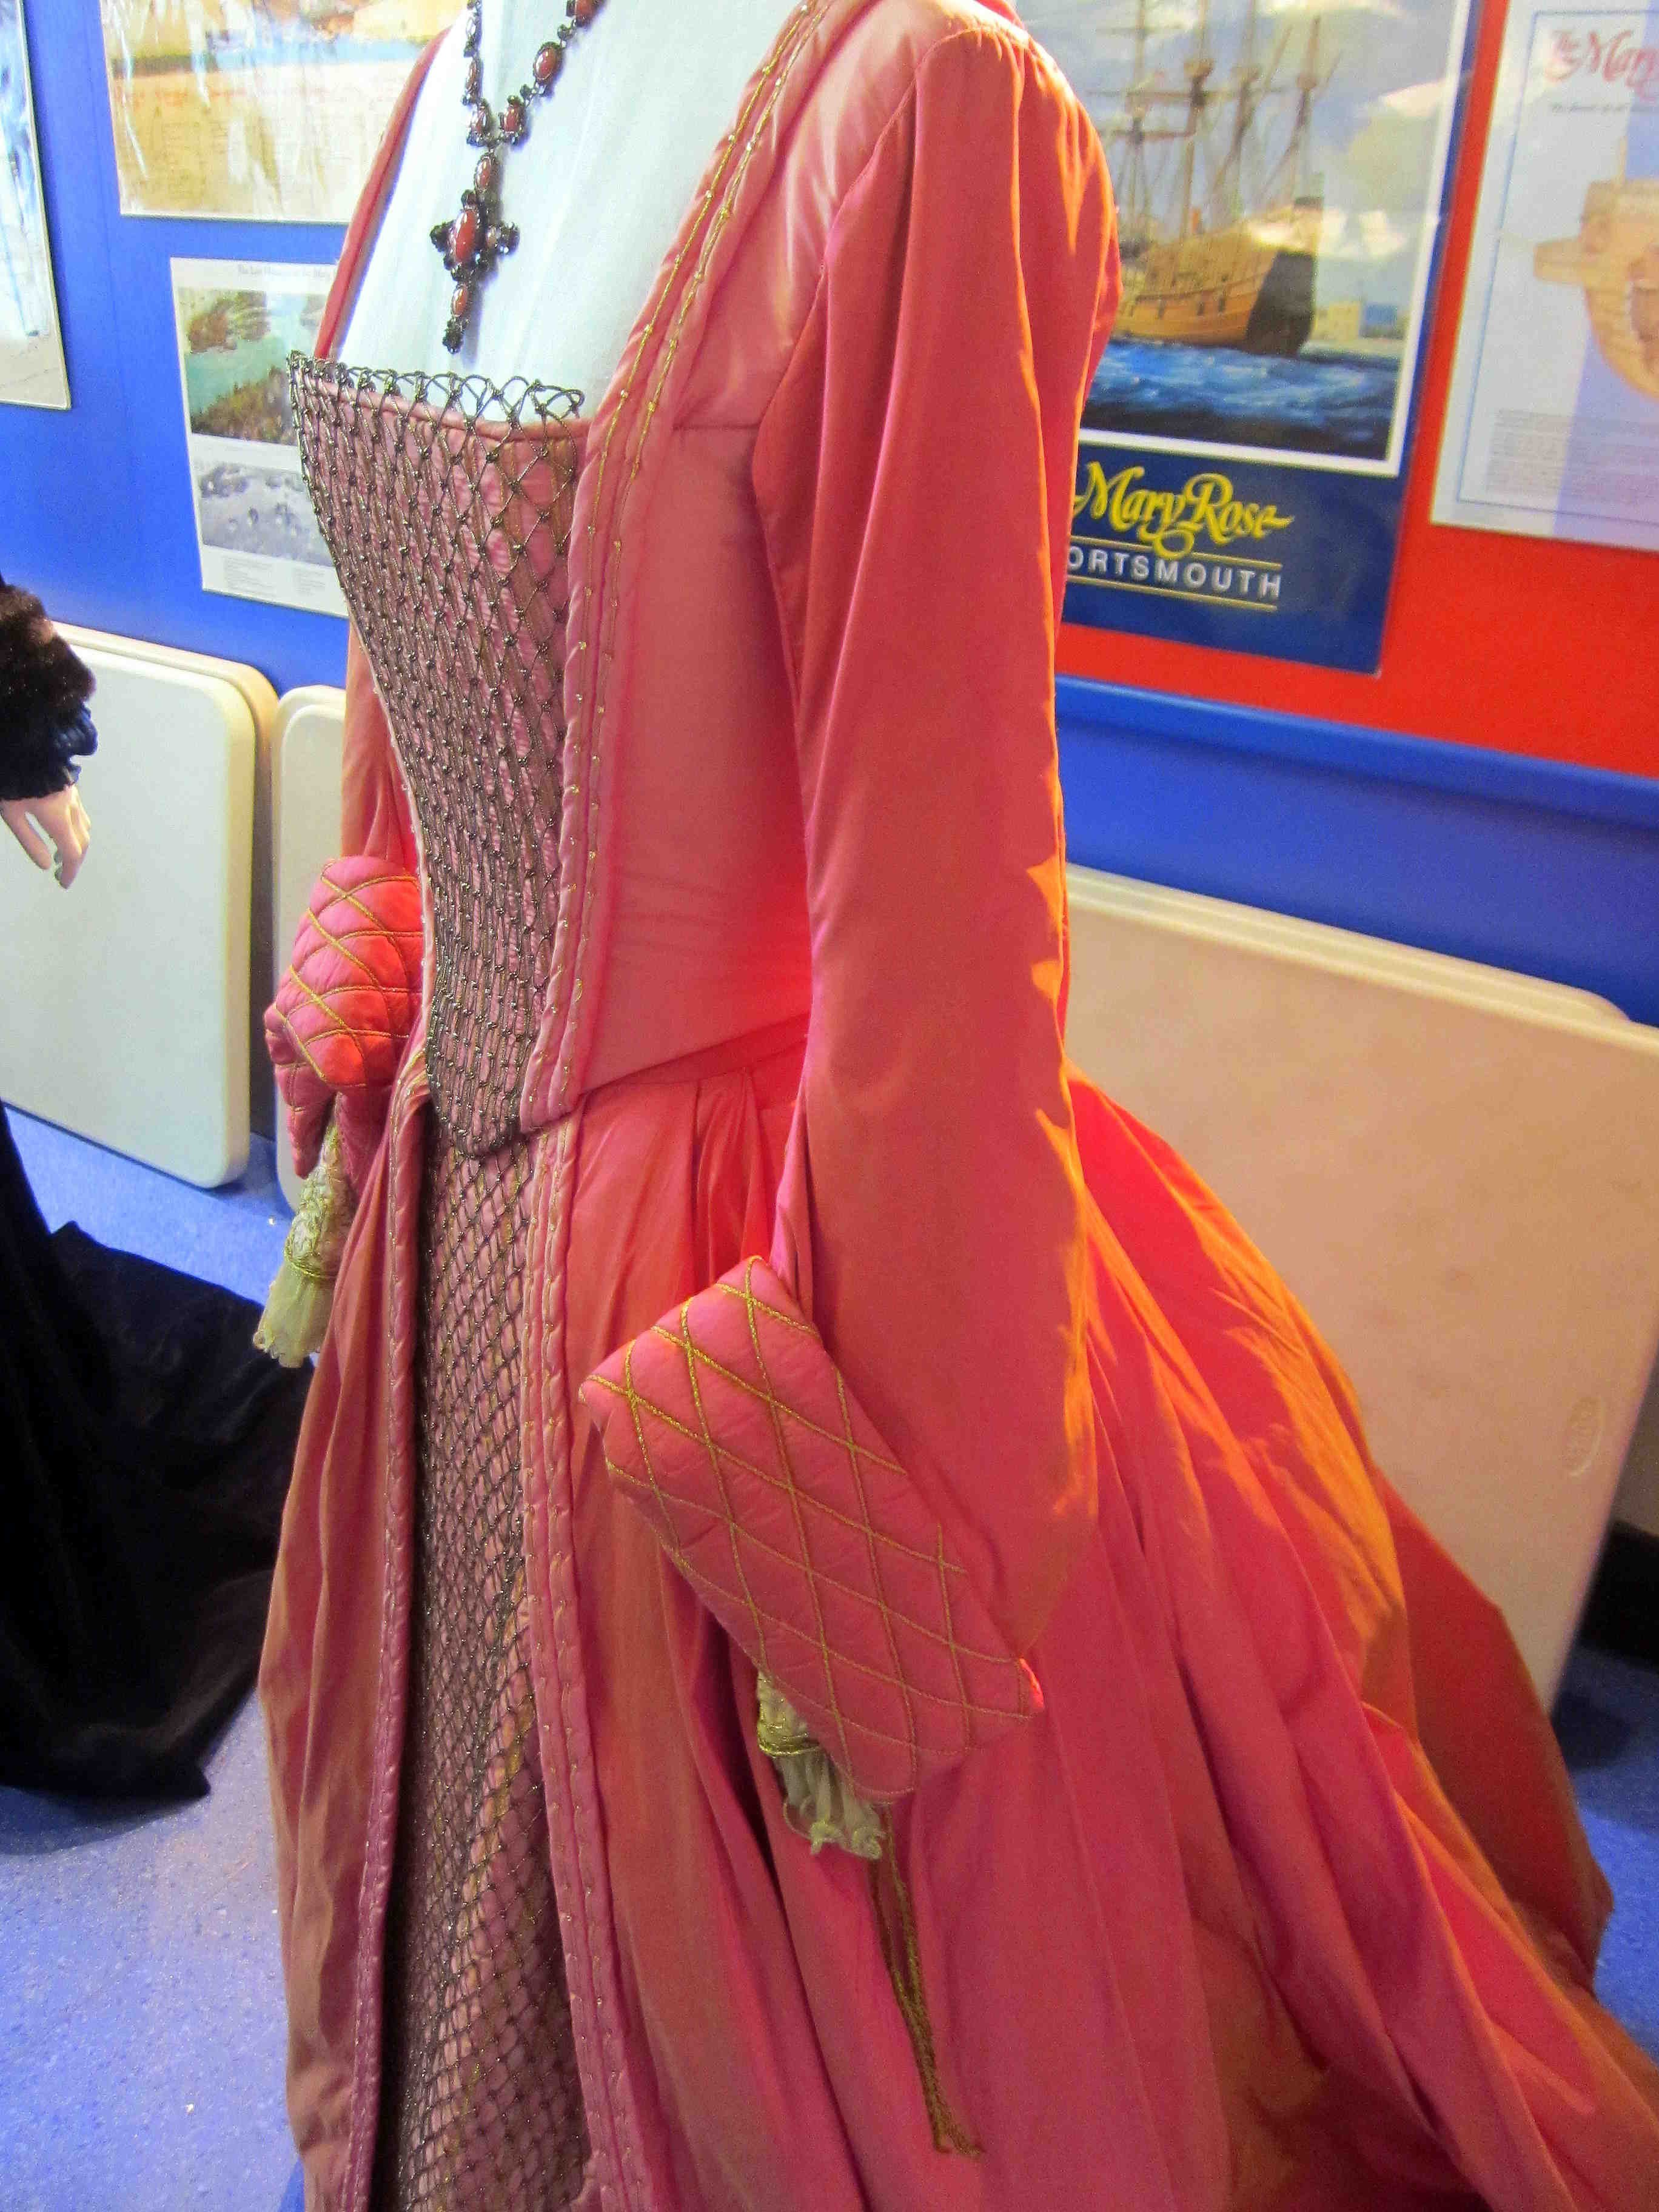 Jane Seymour's dress